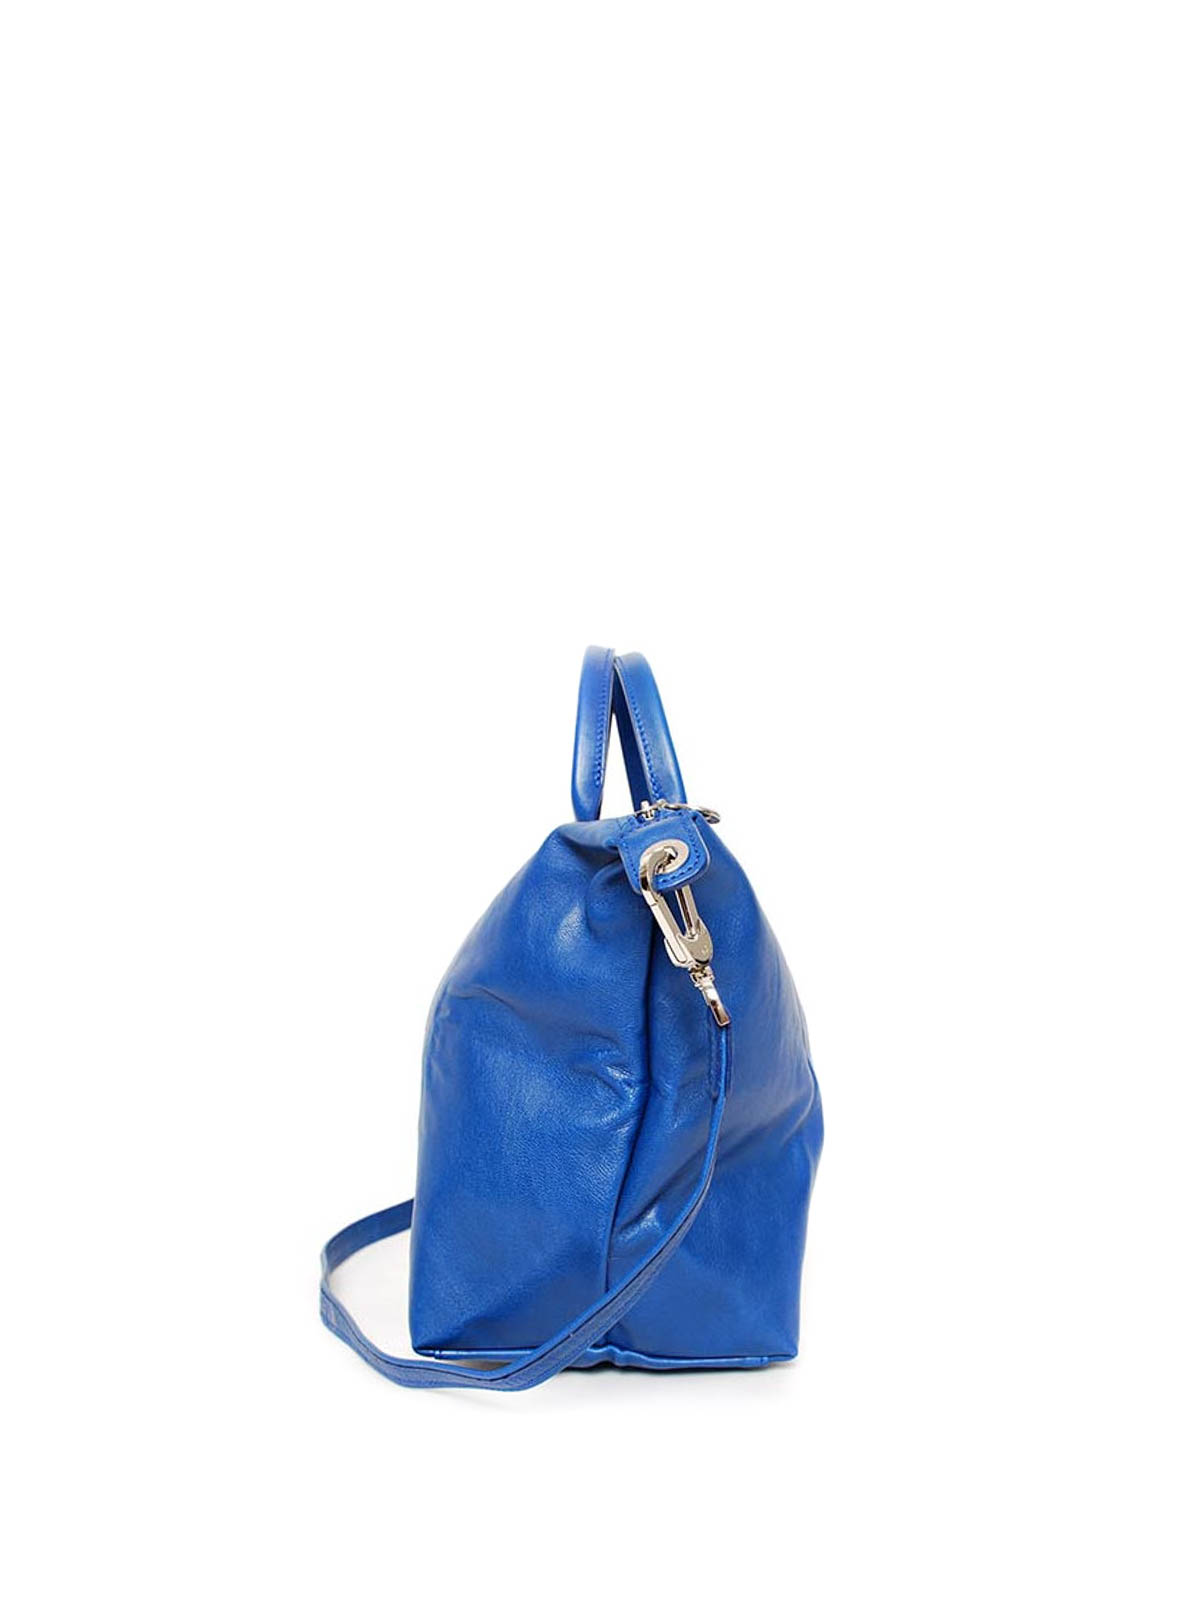 Totes bags Longchamp - Le Pliage Cuir large hand bag - 1515737127